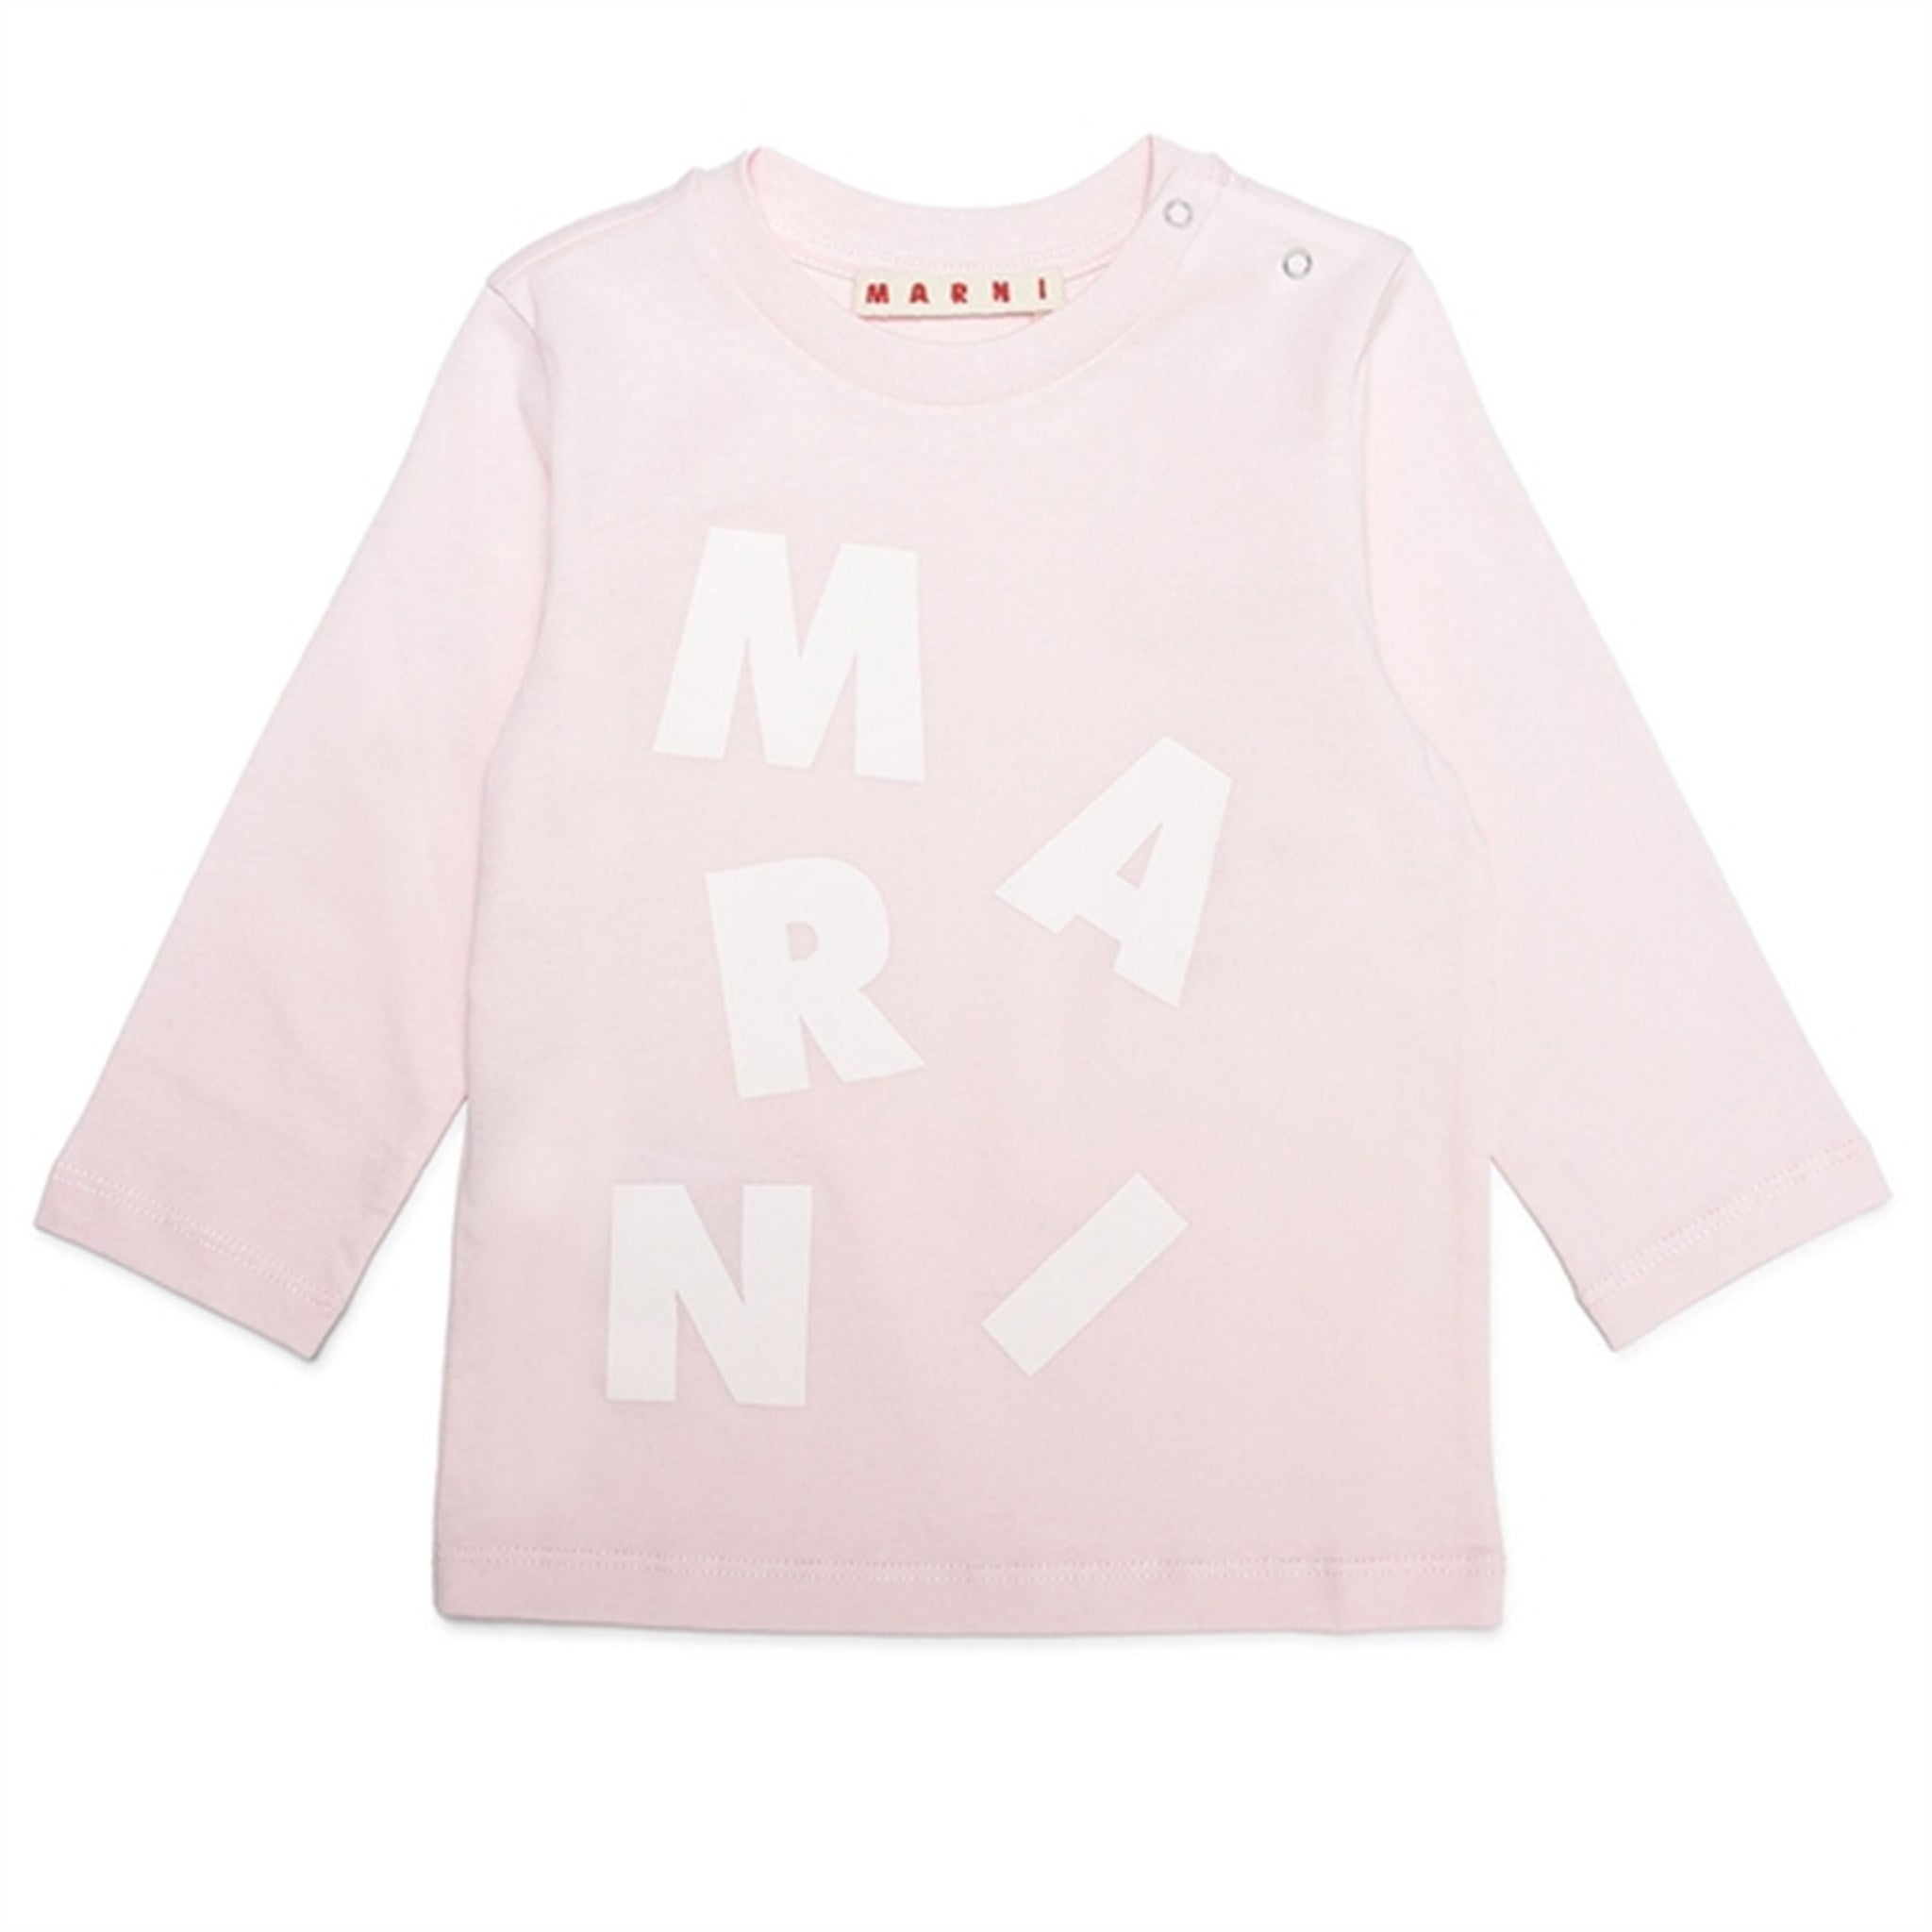 Marni Ballet Pink T-shirt